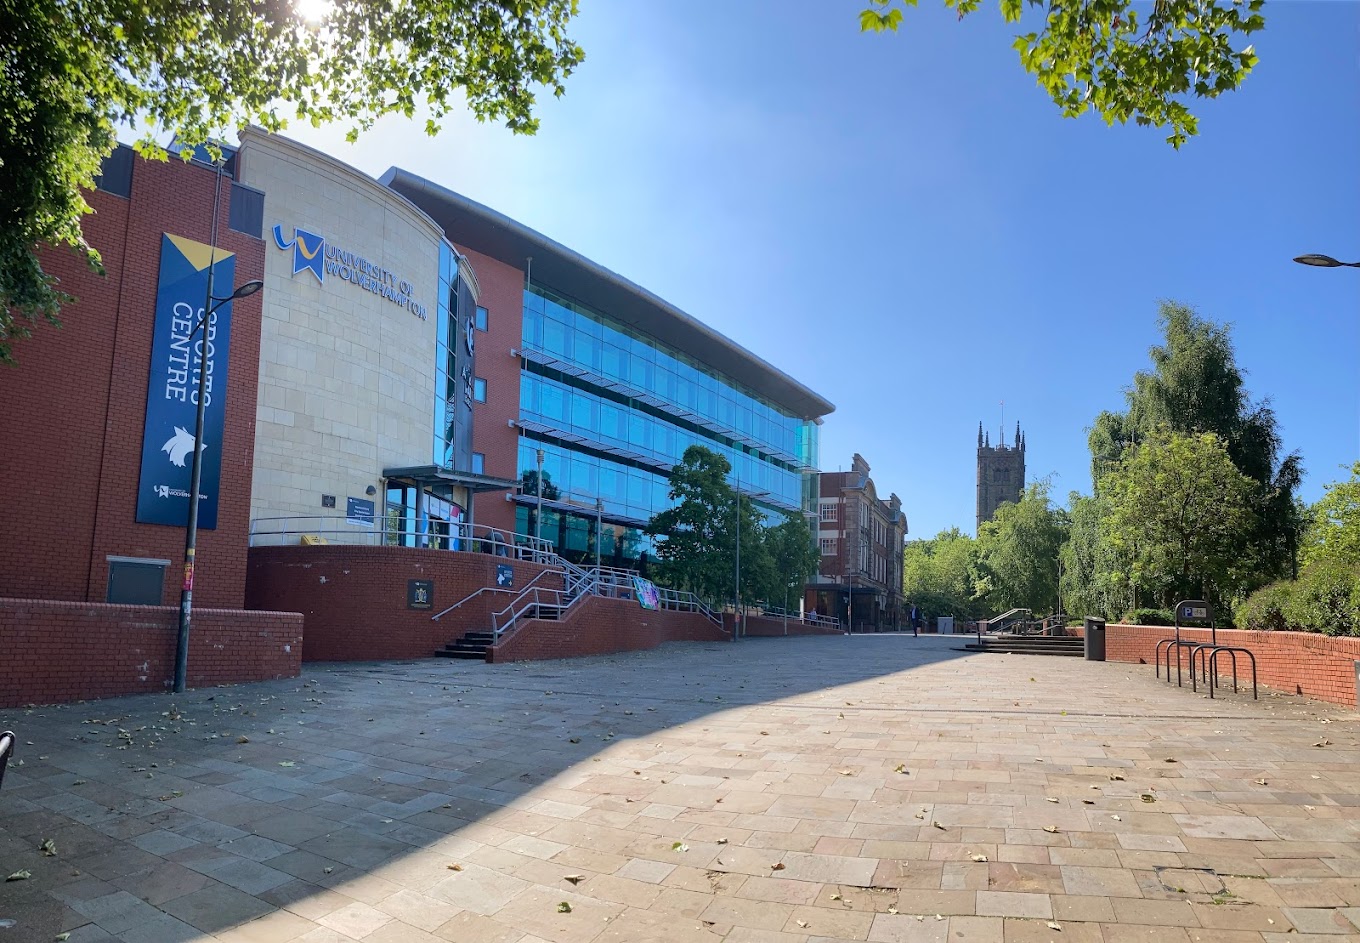 University of Wolverhampton-UK